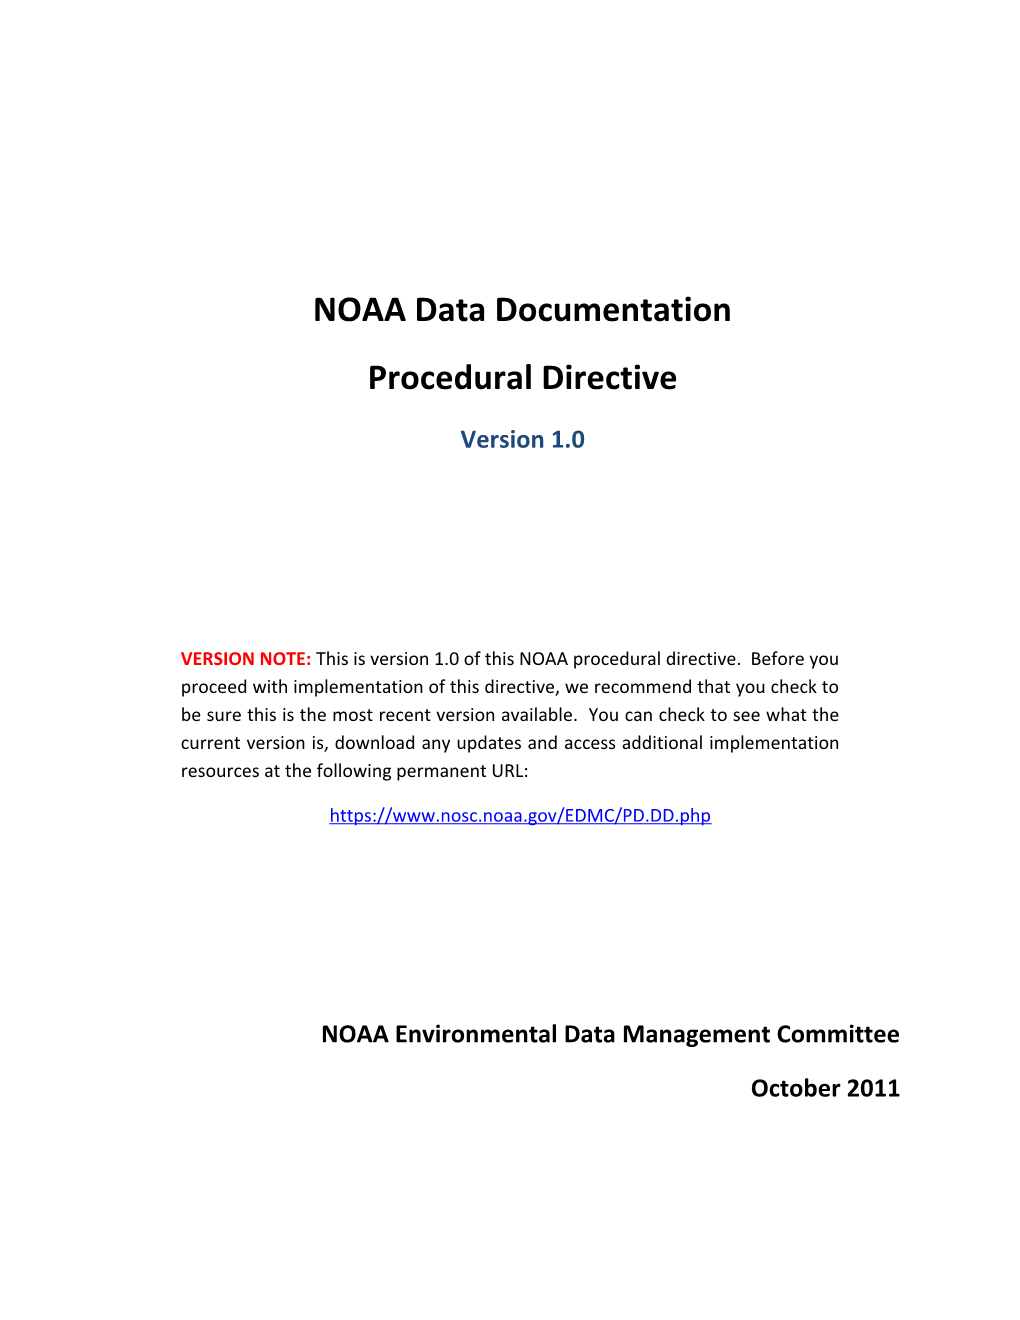 NMFS Data Documentation Procedural Directive